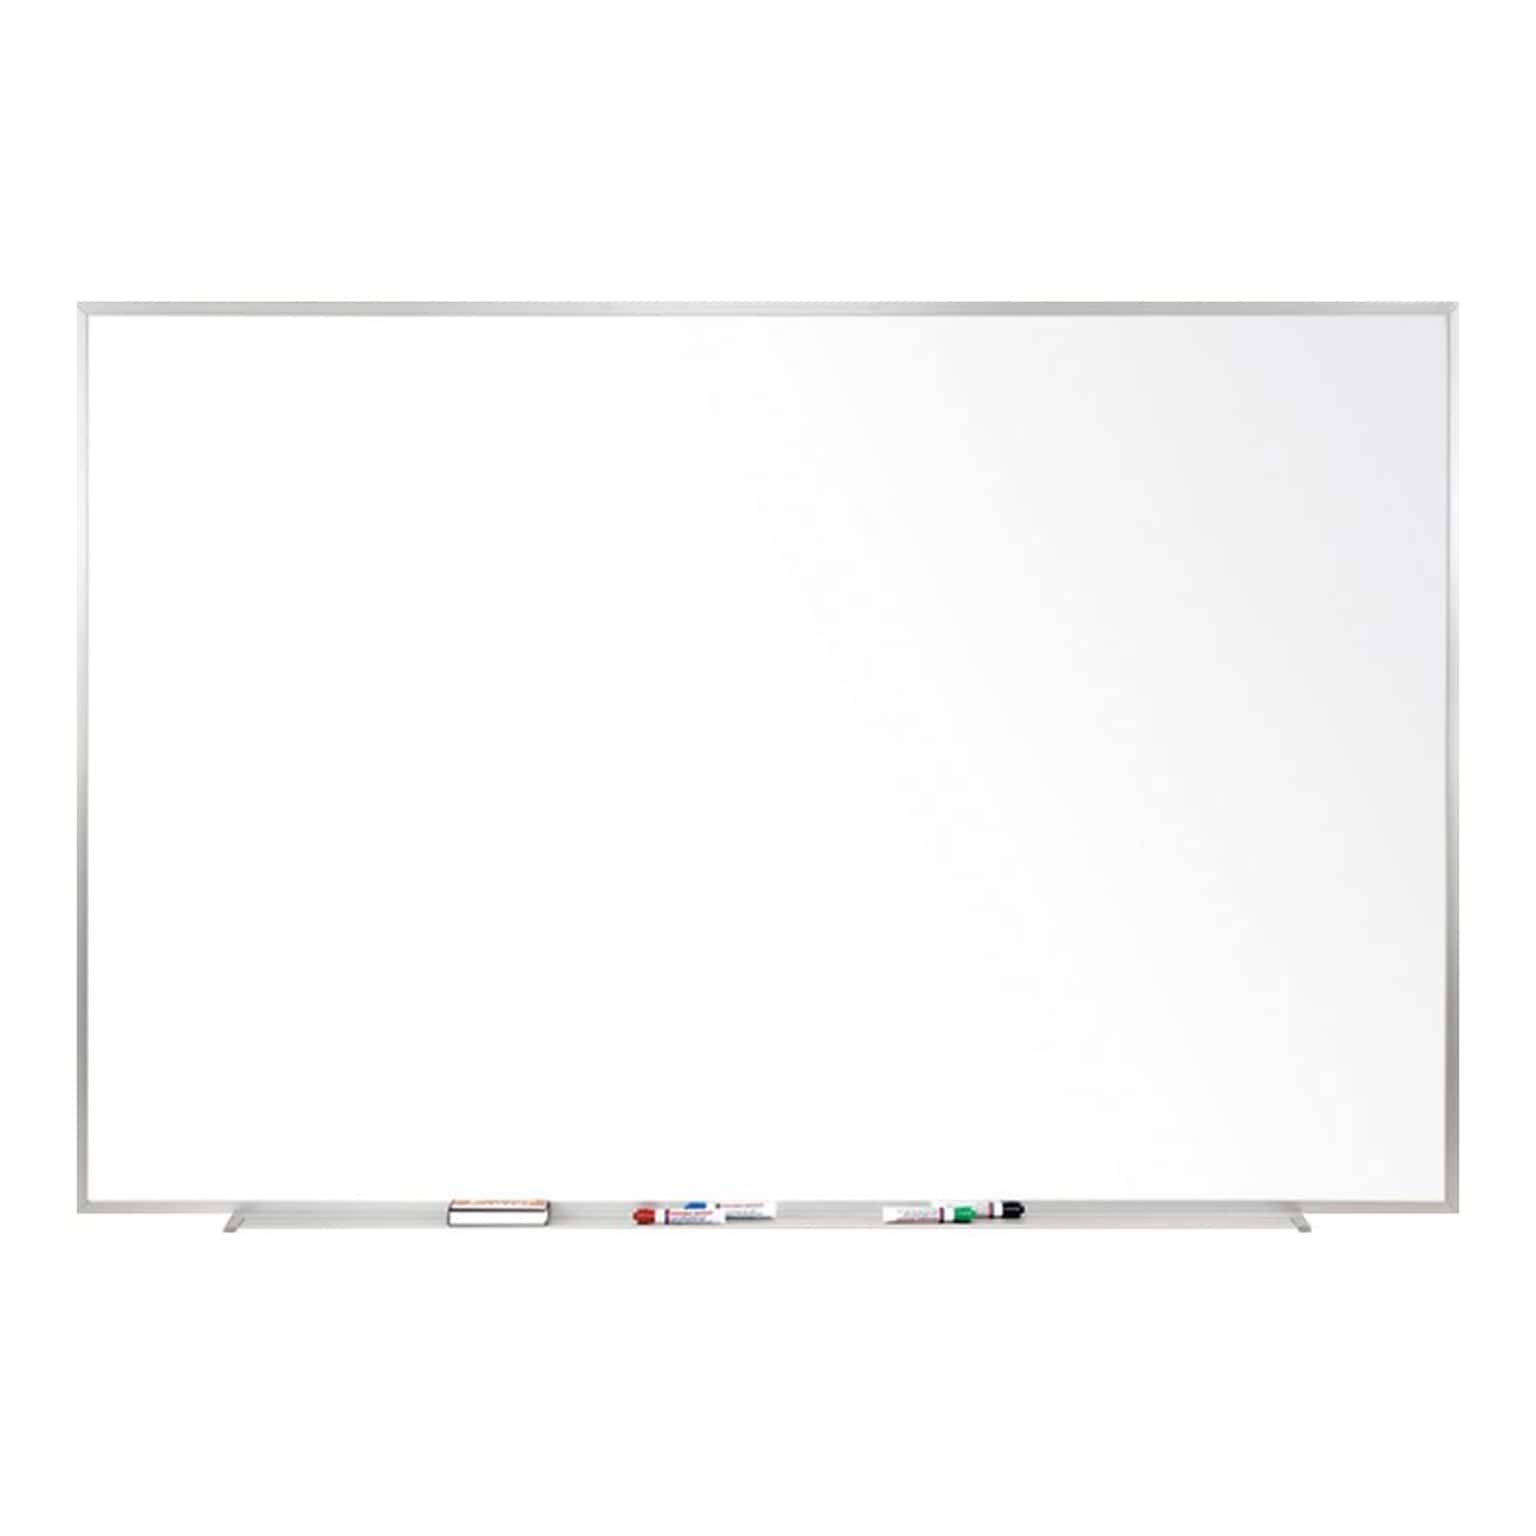 Ghent M2 Series Laminate Dry-Erase Whiteboard, Aluminum Frame, 5 x 4 (M2-45-4)